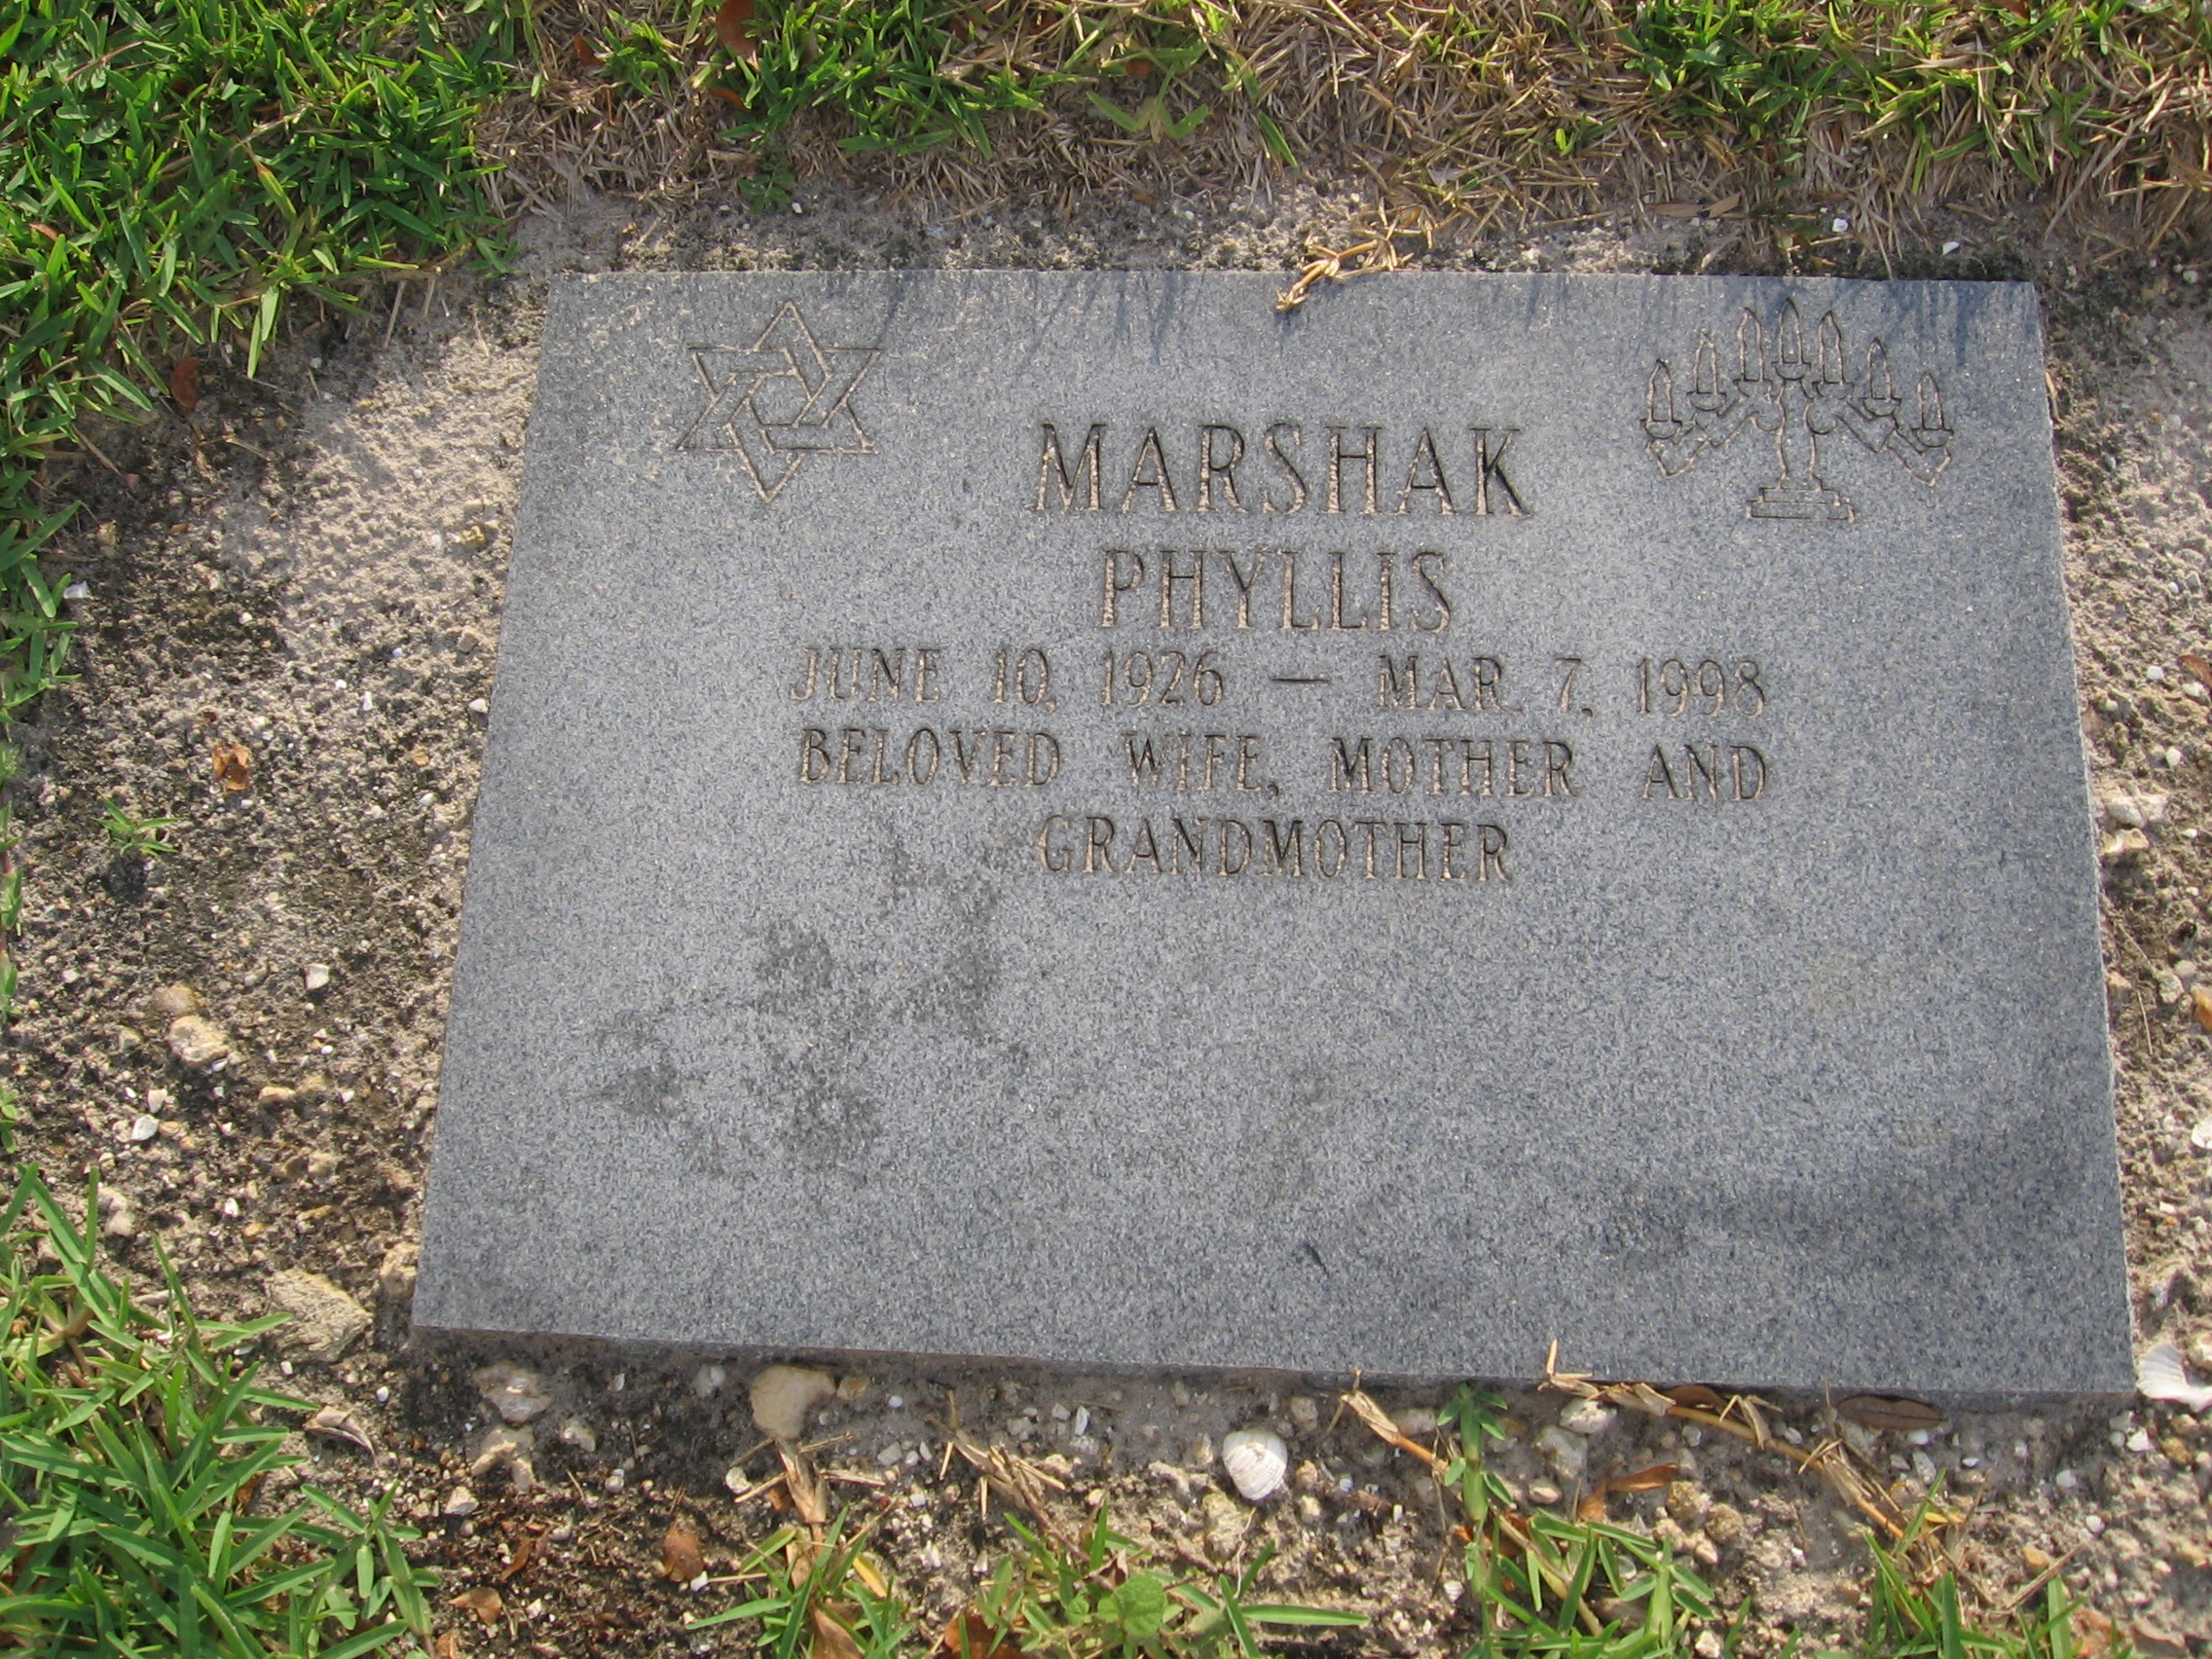 Phyllis Marshak